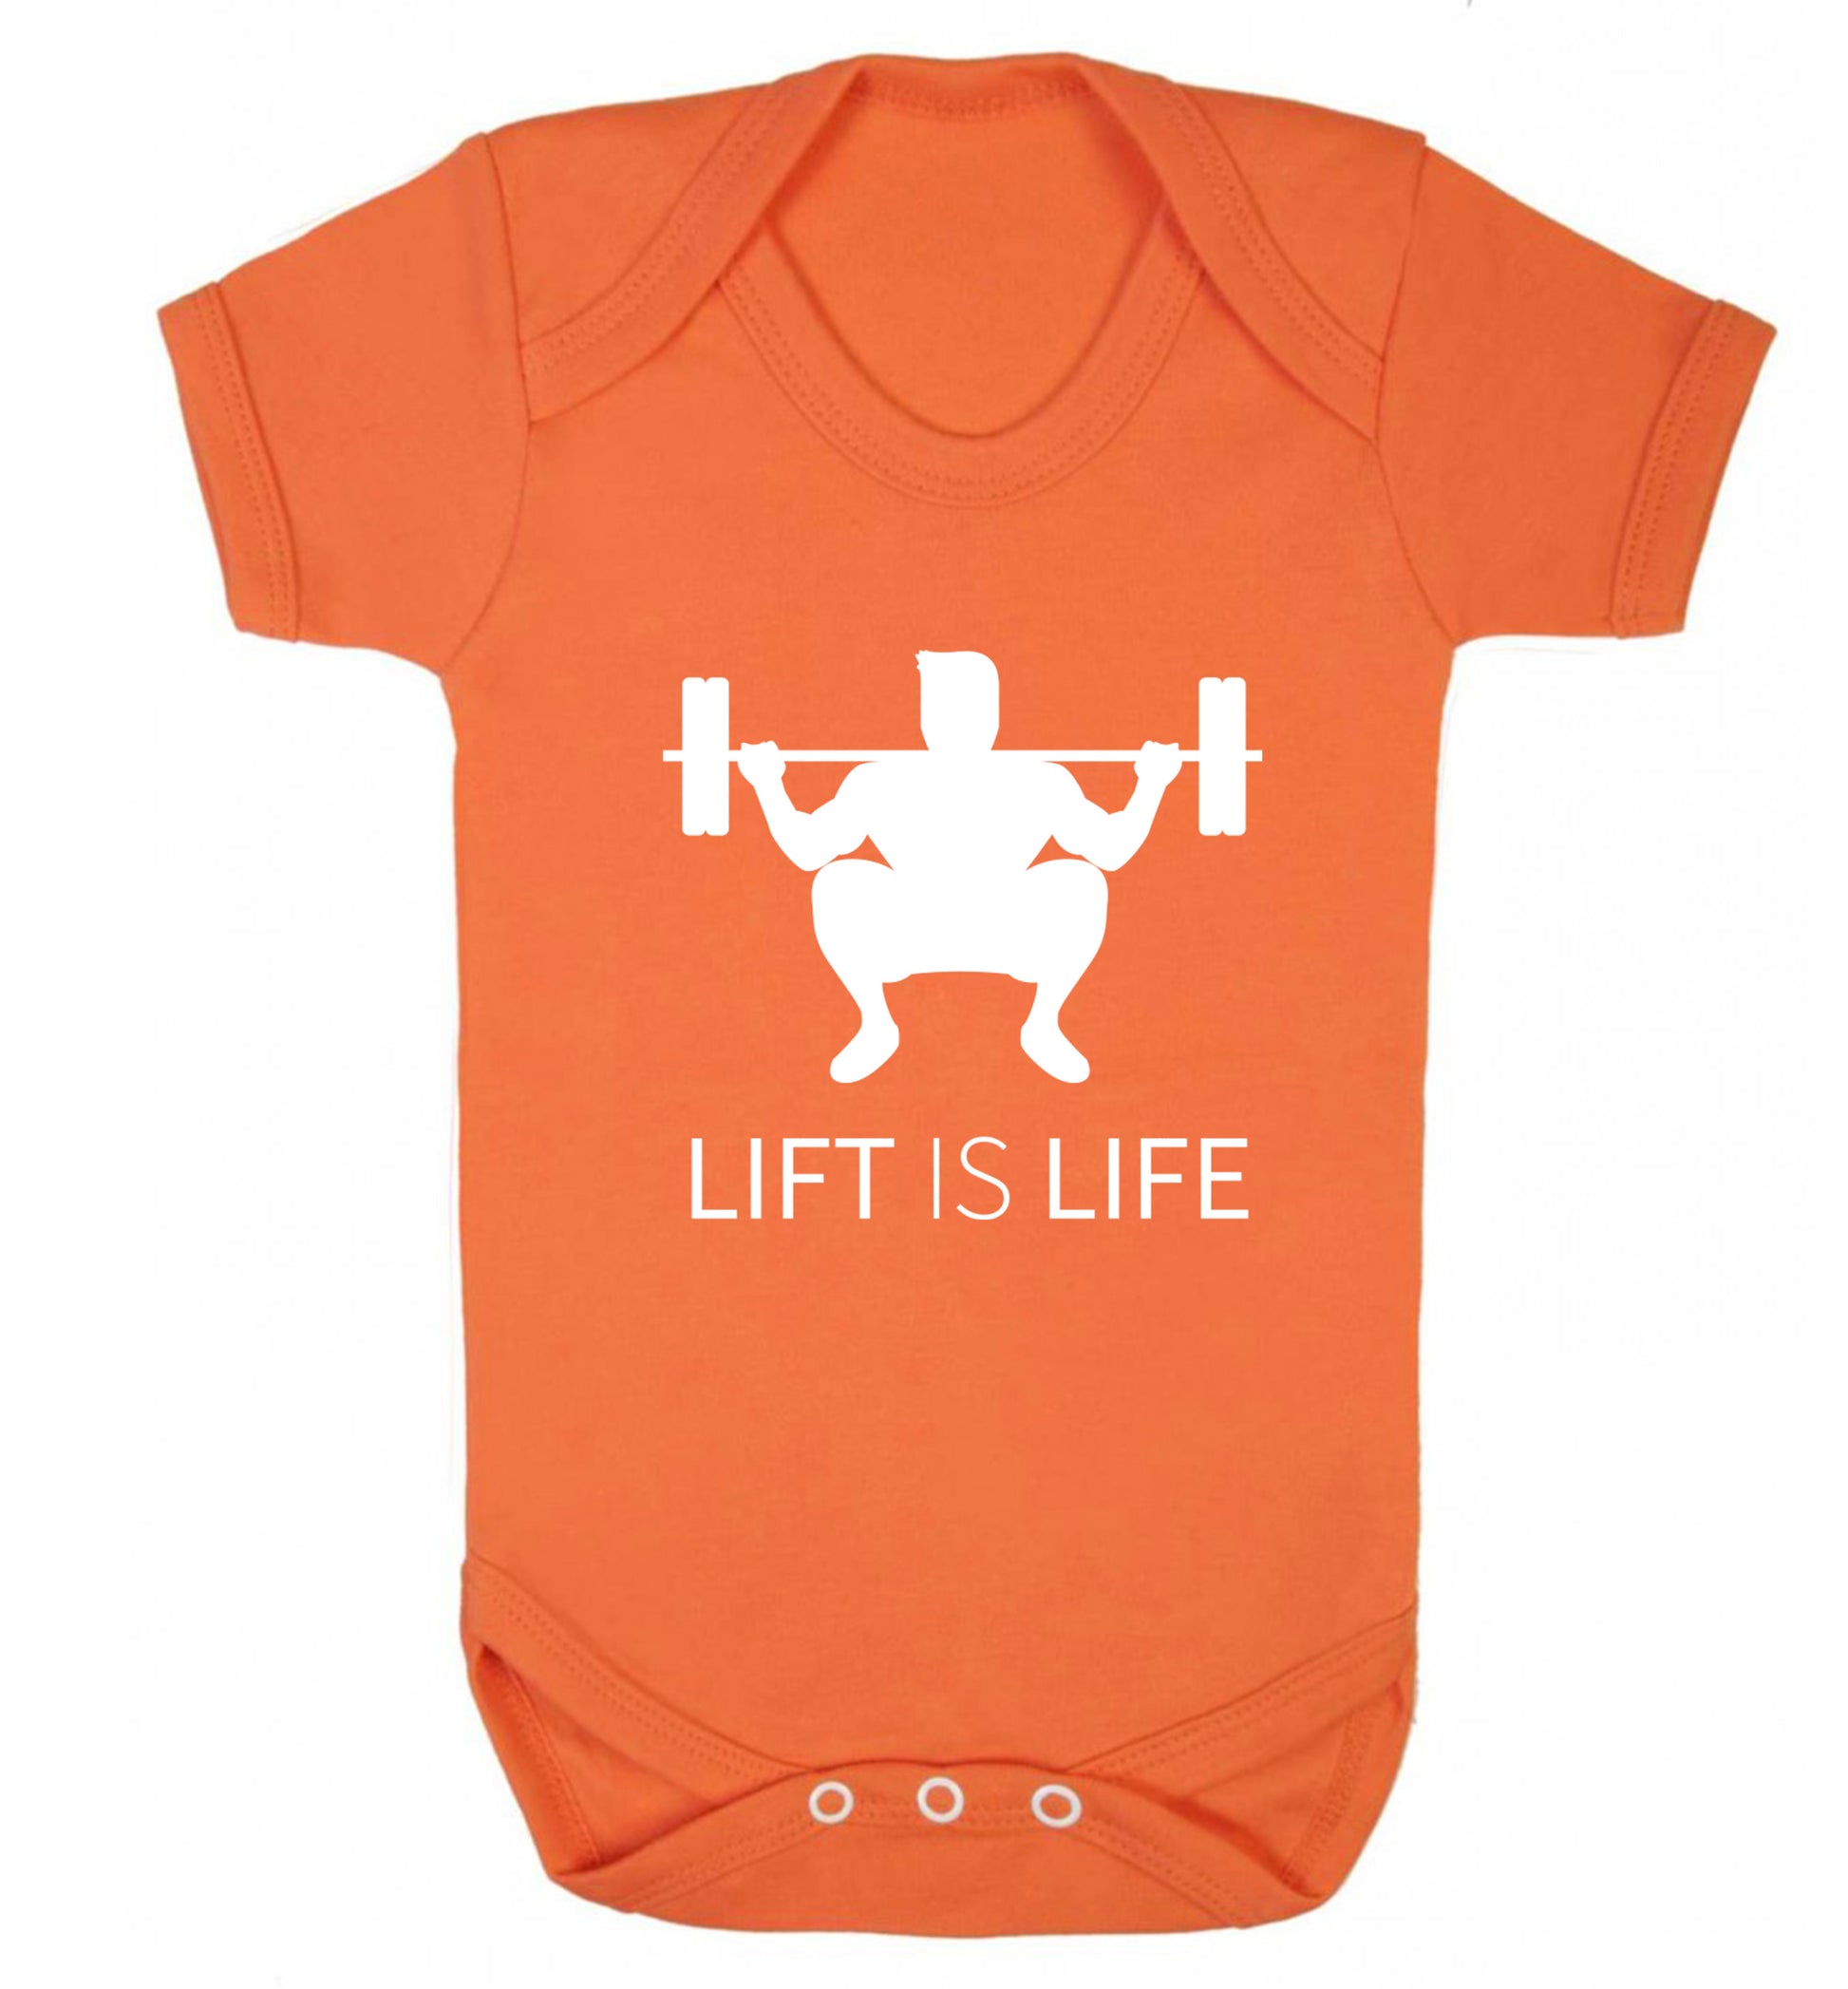 Lift is life Baby Vest orange 18-24 months